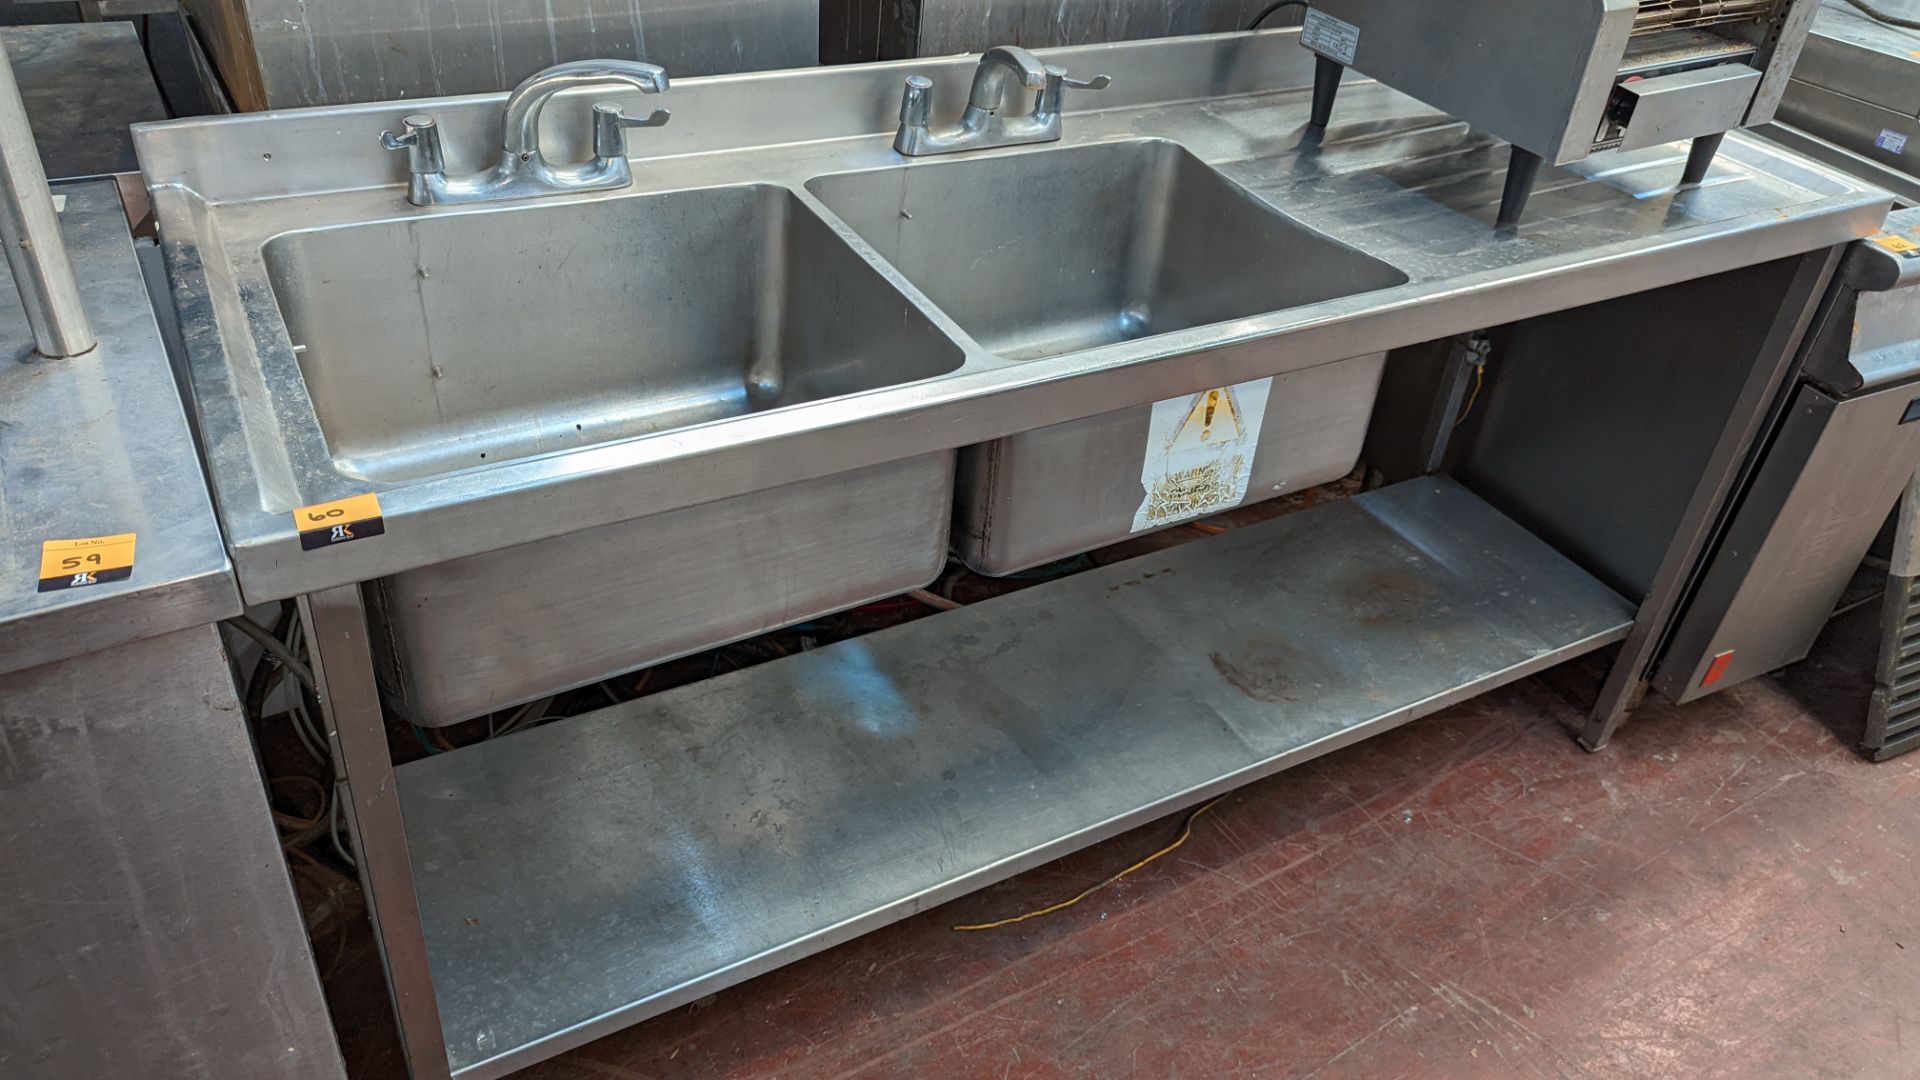 Stainless steel twin bowl sink arrangement incorporating mixer taps, drainer & shelf below - Image 2 of 4